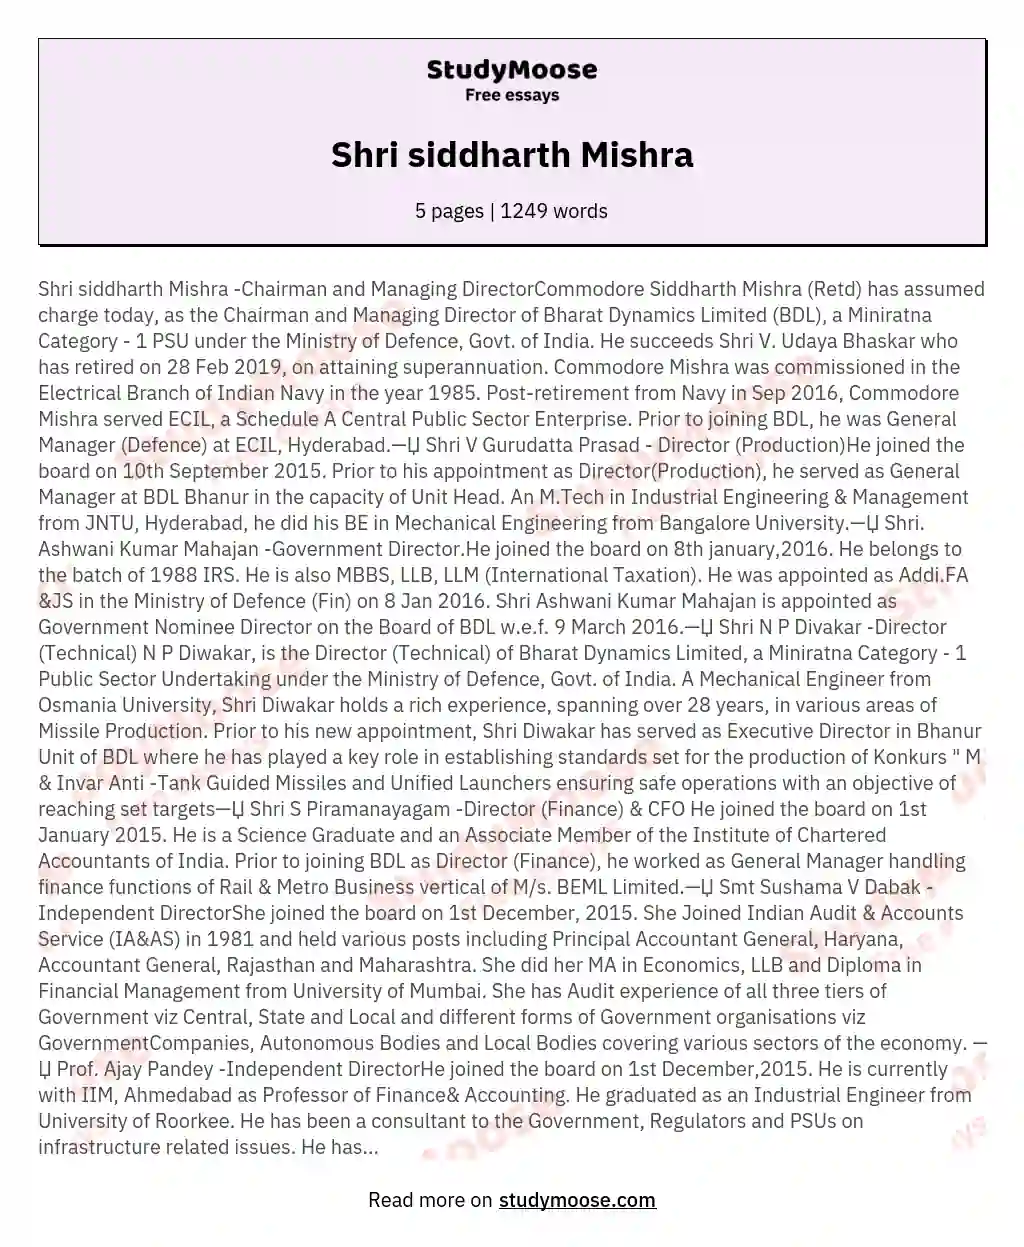 Shri siddharth Mishra essay